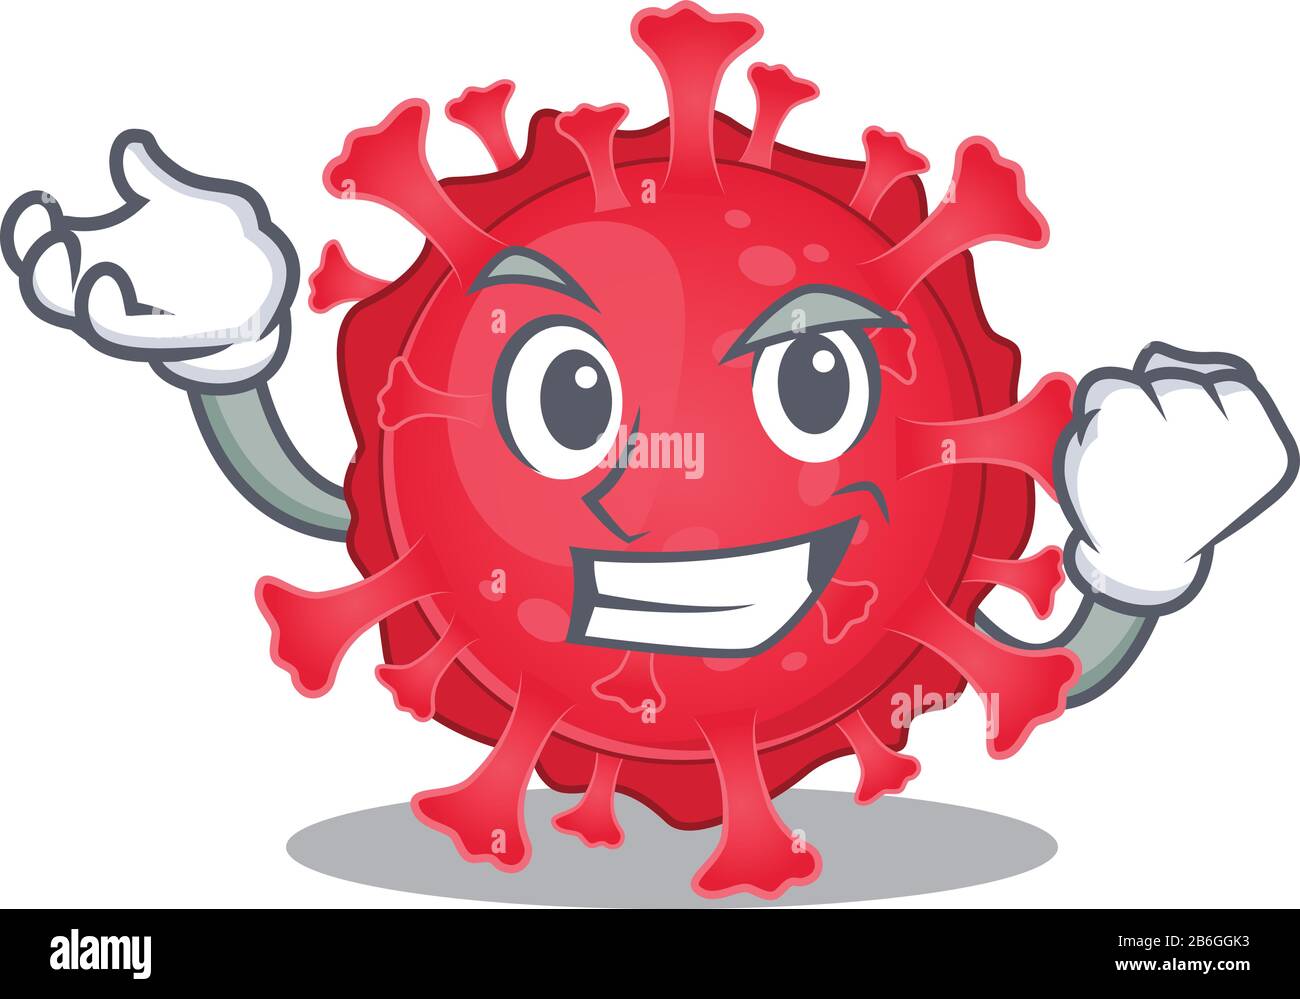 Coronavirus substance cartoon character style with happy face Stock Vector